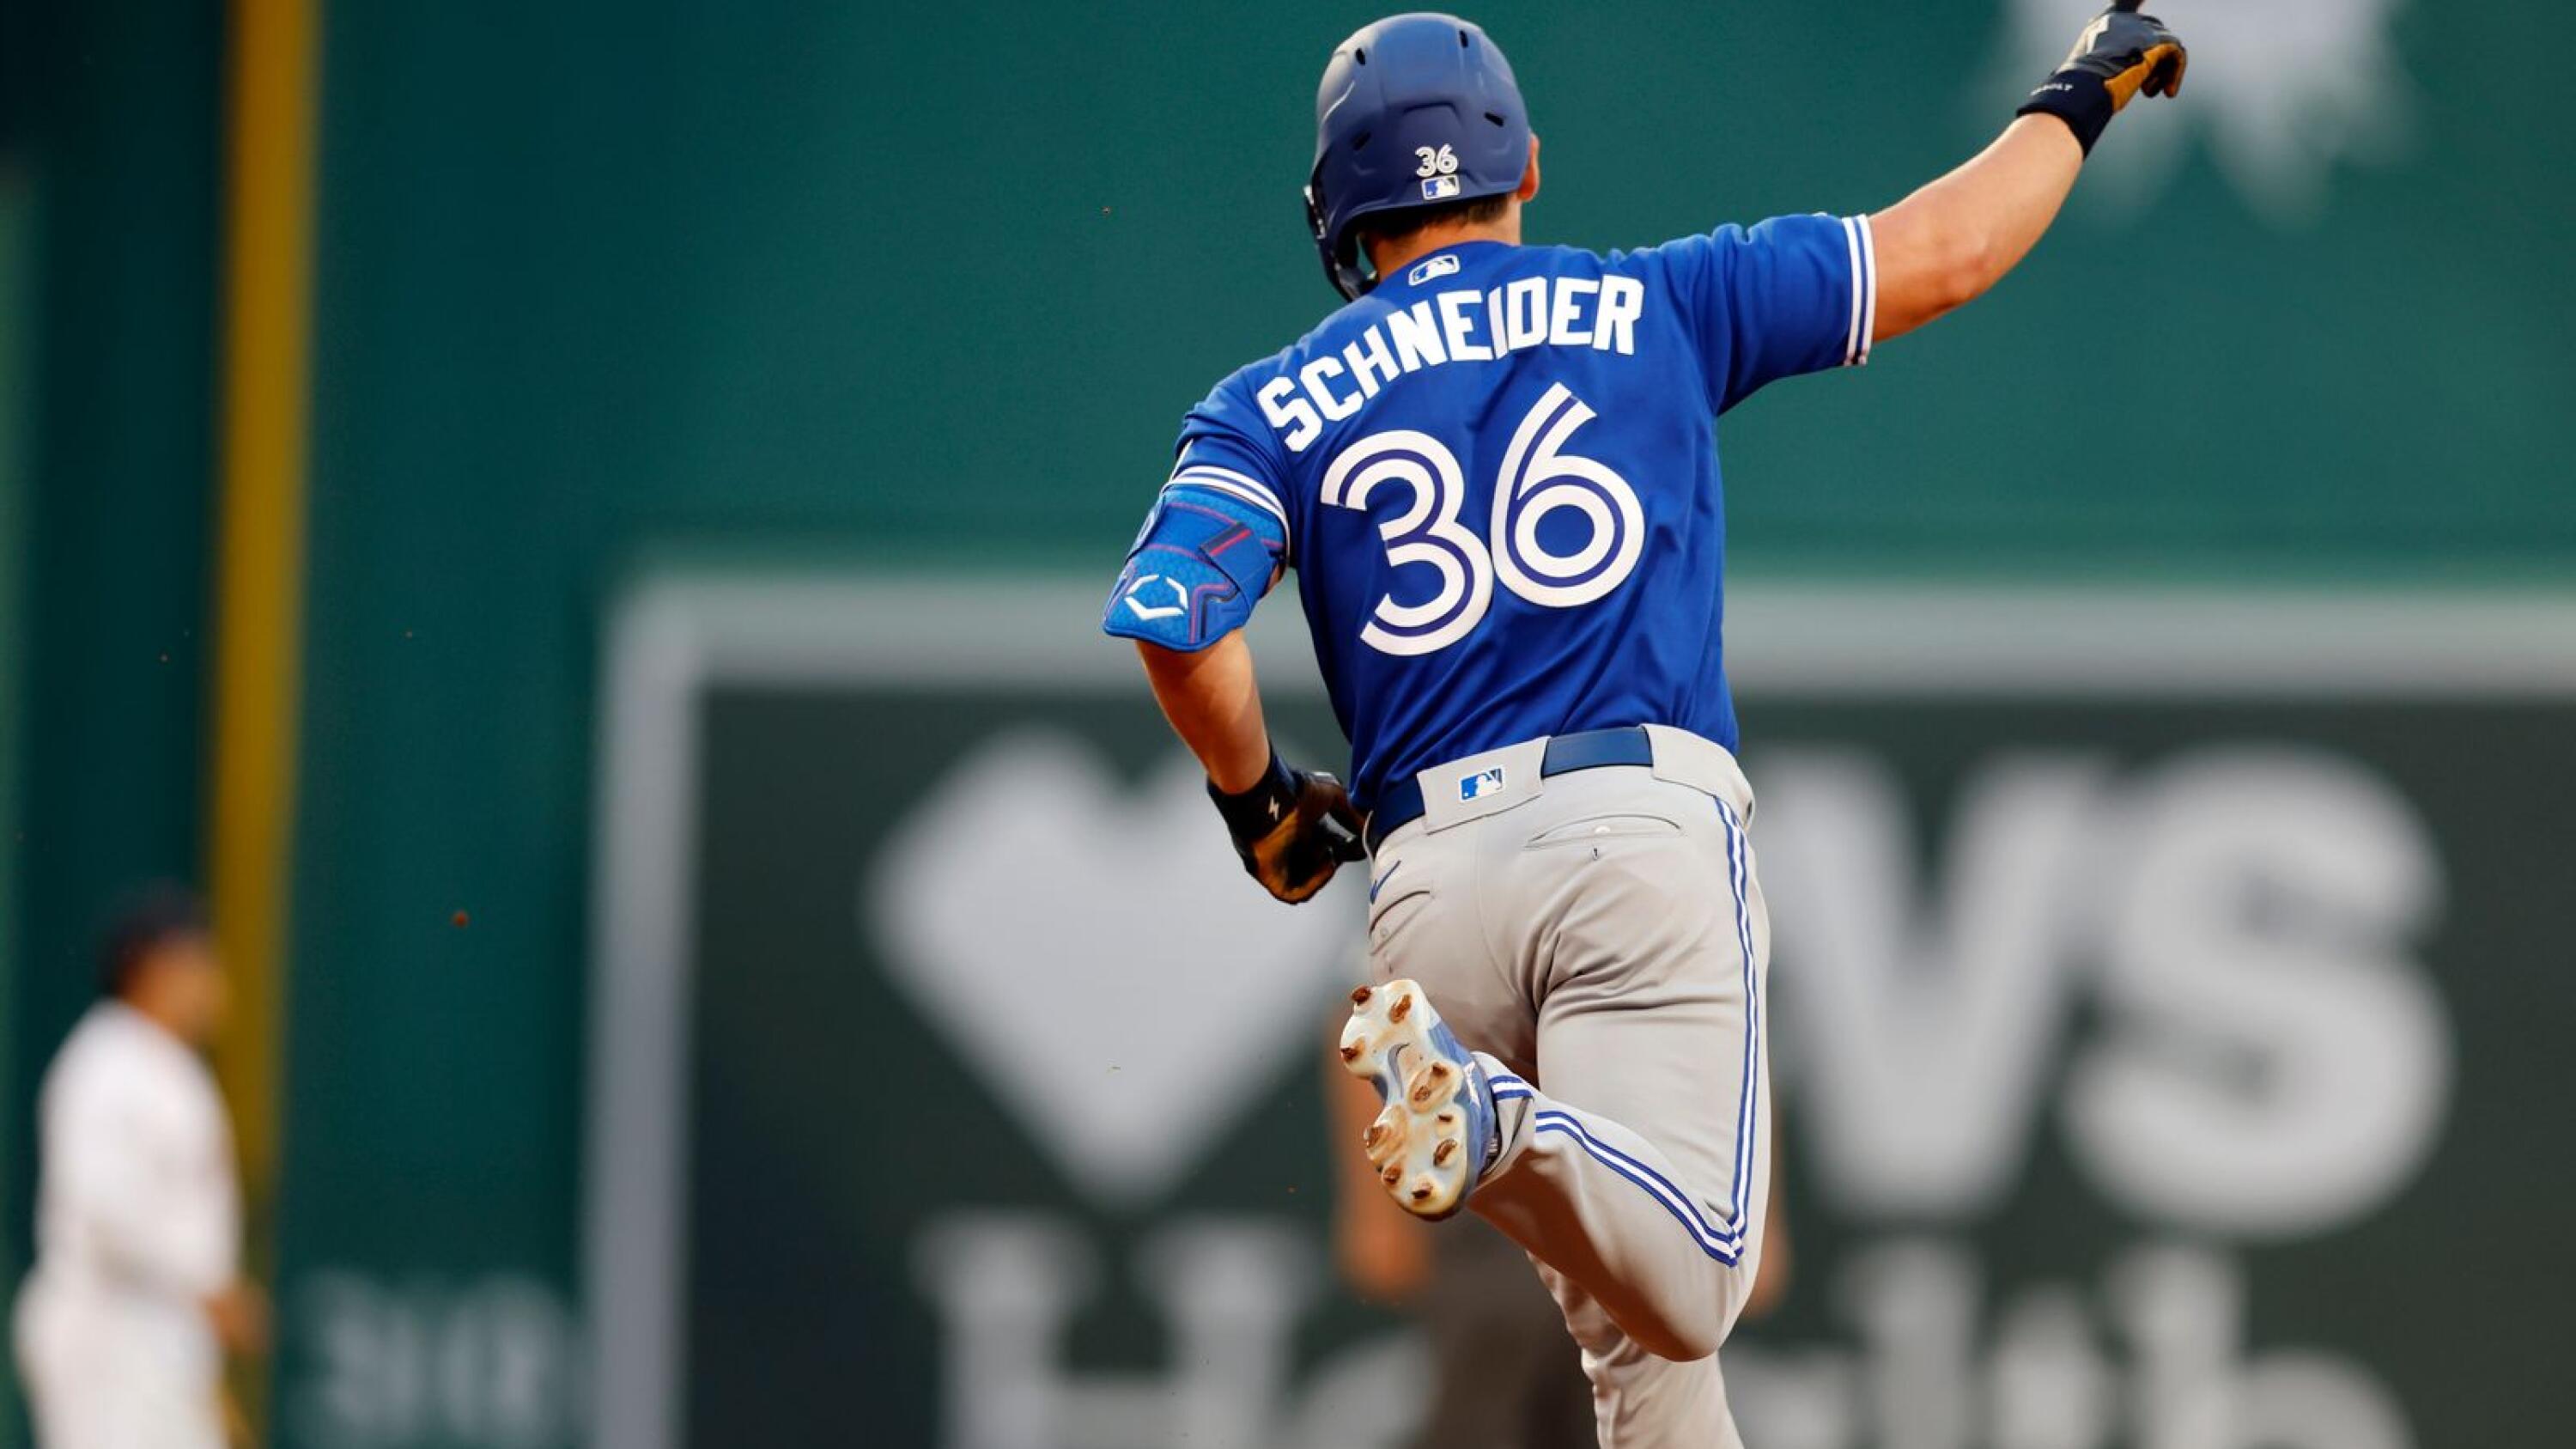 Schneider homers in first MLB at-bat to help Blue Jays beat Red